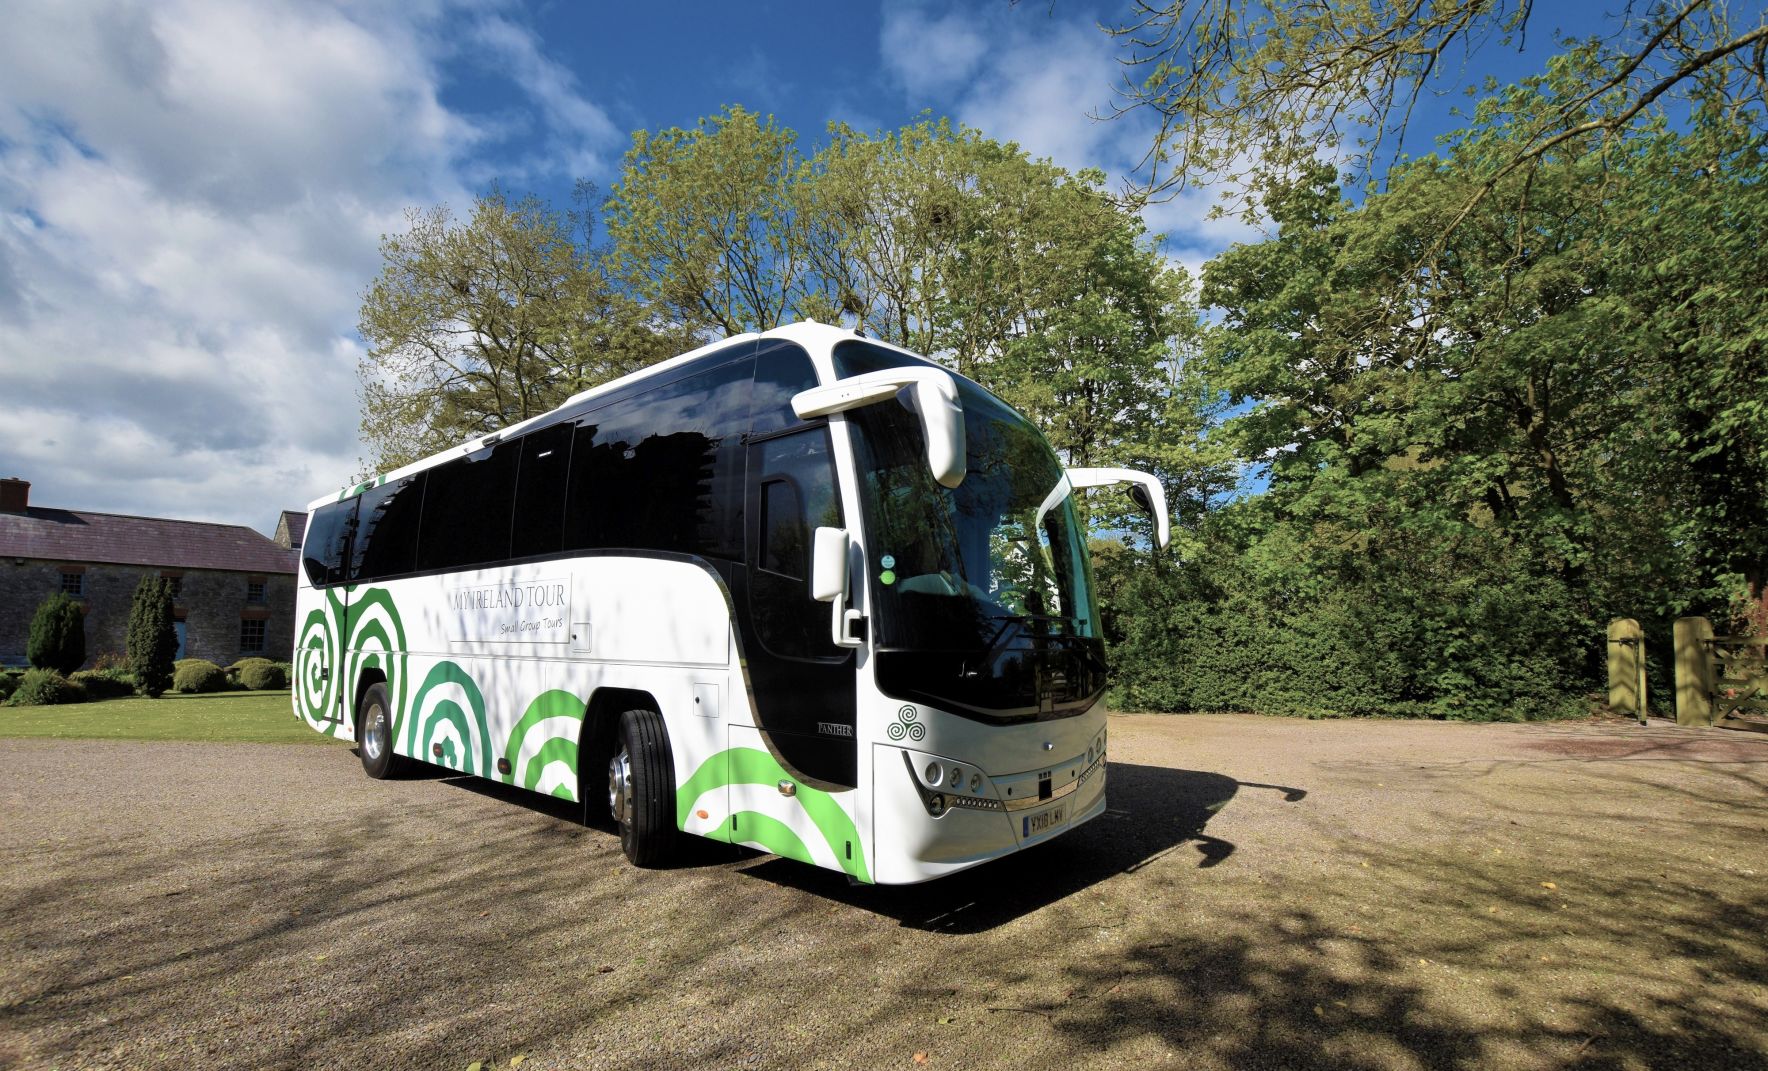 bus tours from westport ireland